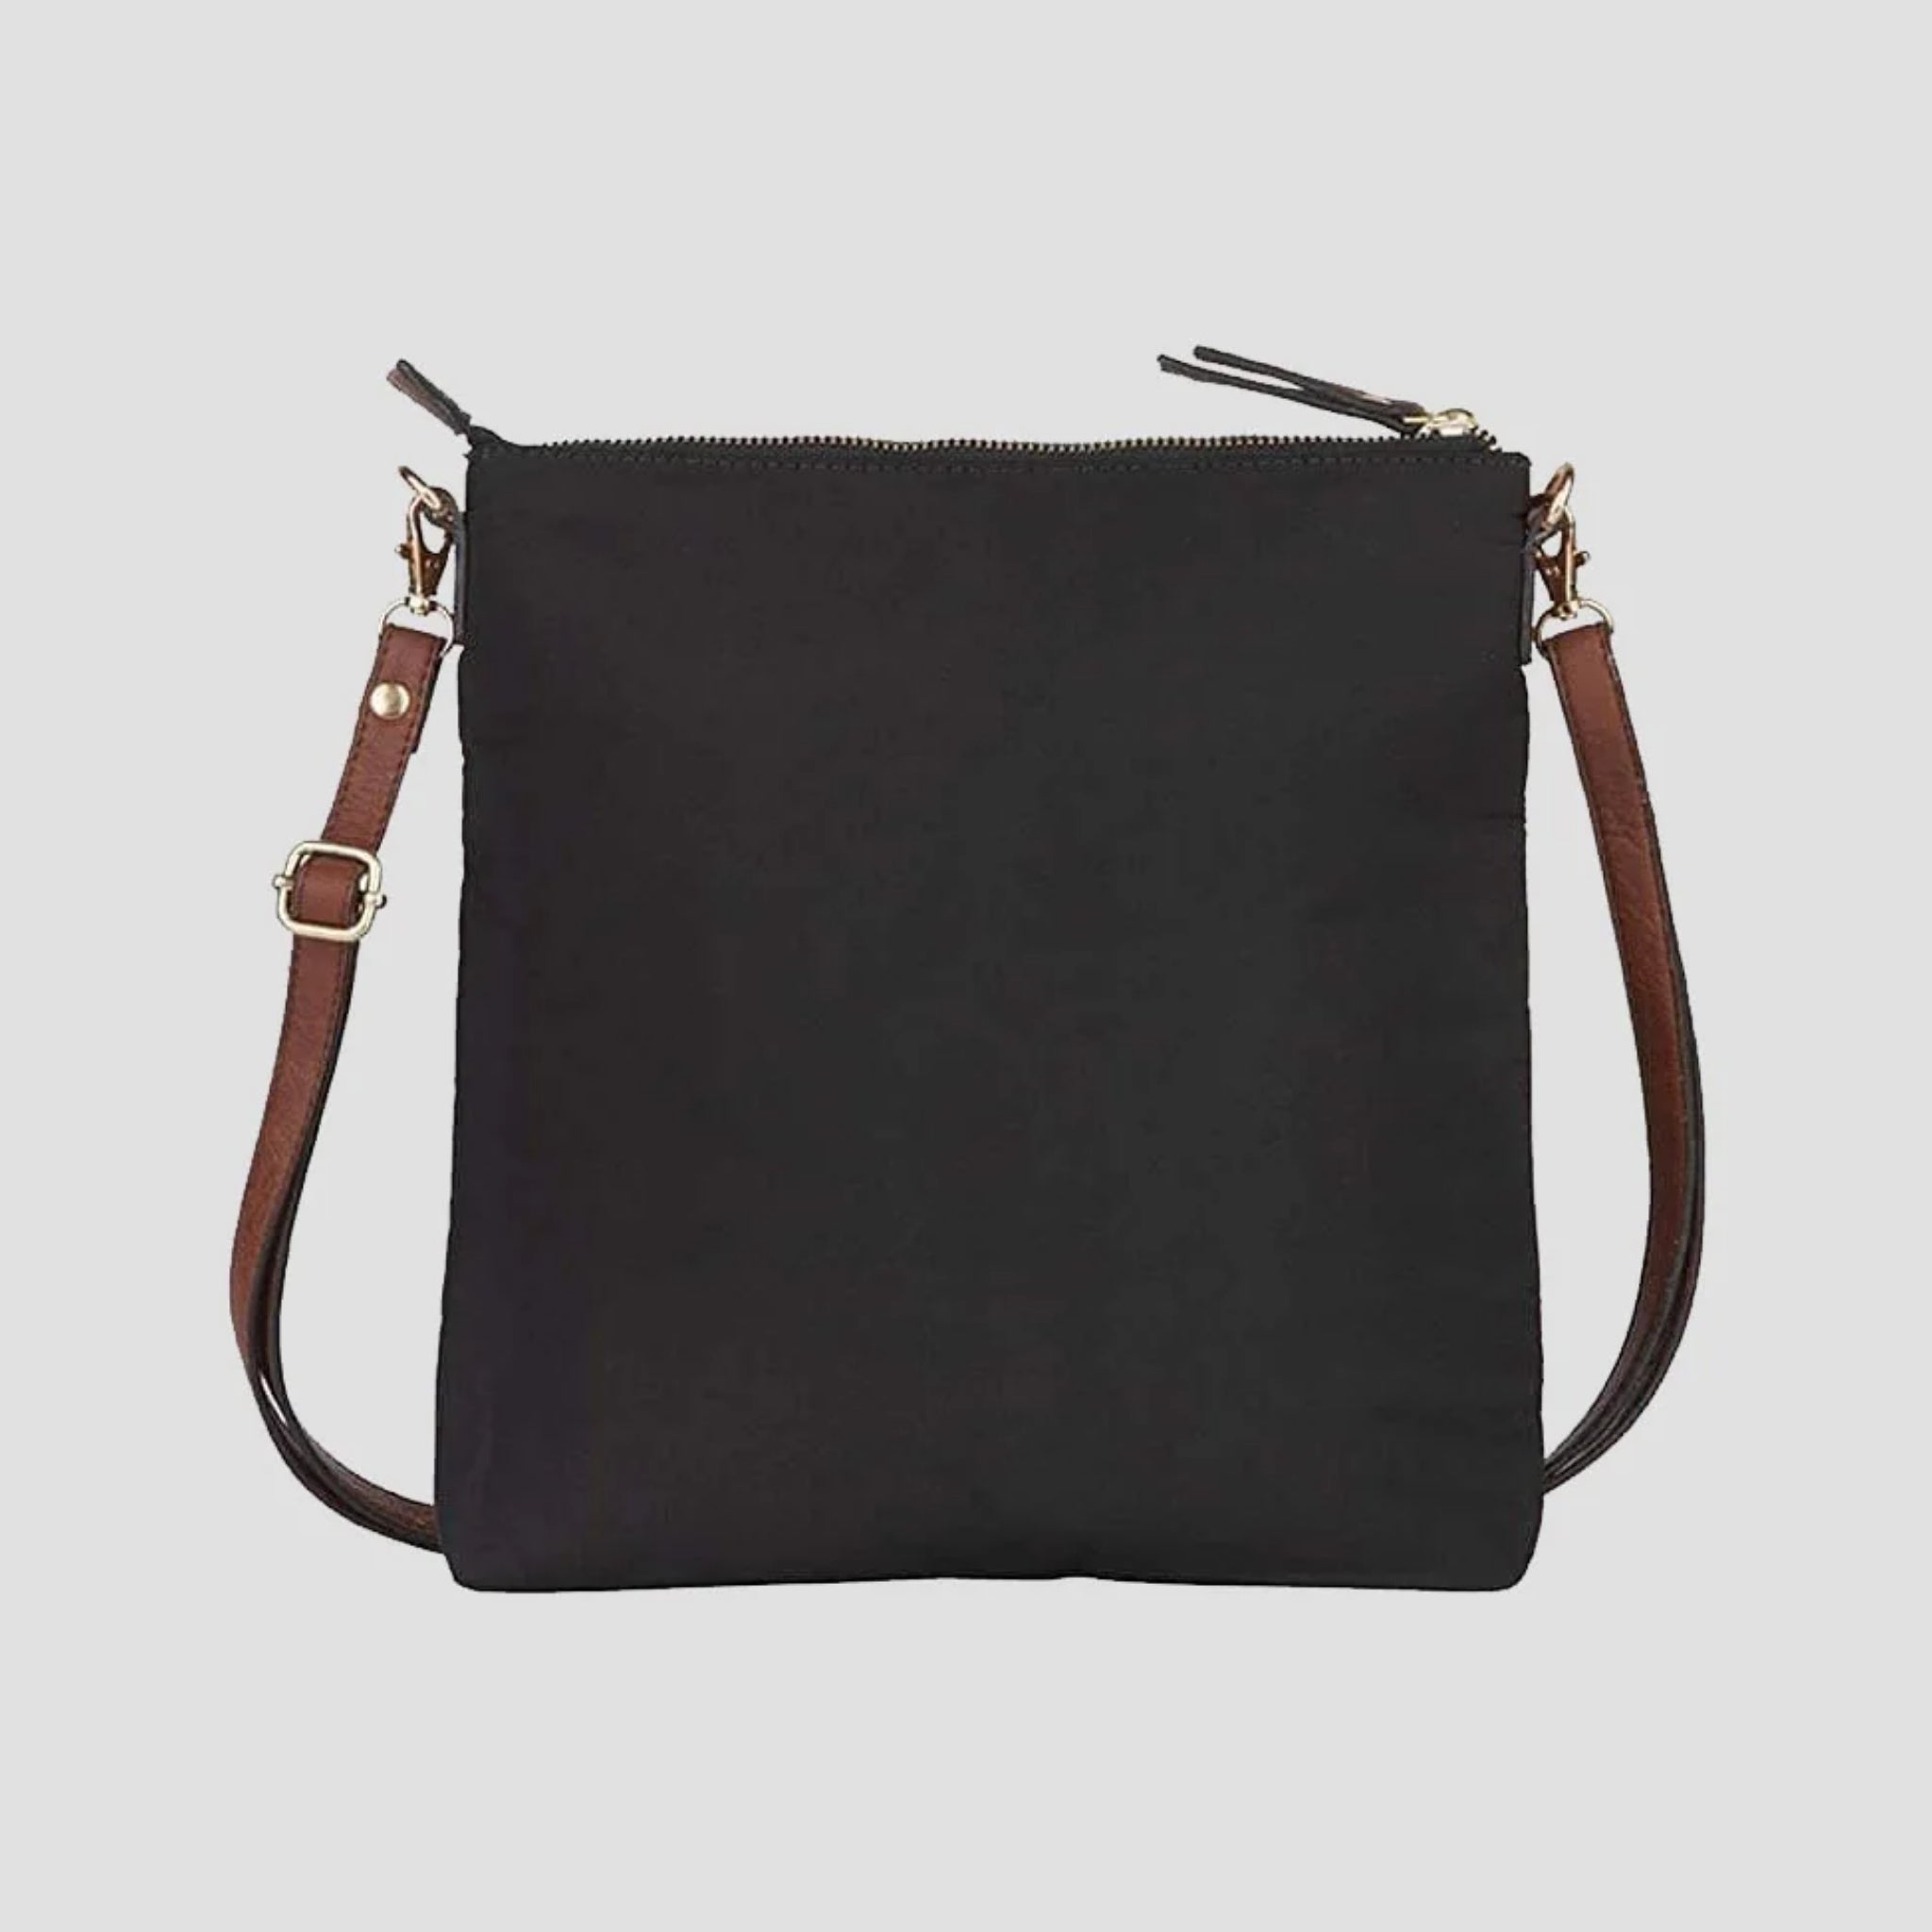 Mona-B Bag Mona B - Medium Messenger Crossbody Bag with Stylish Design for Women (Black)